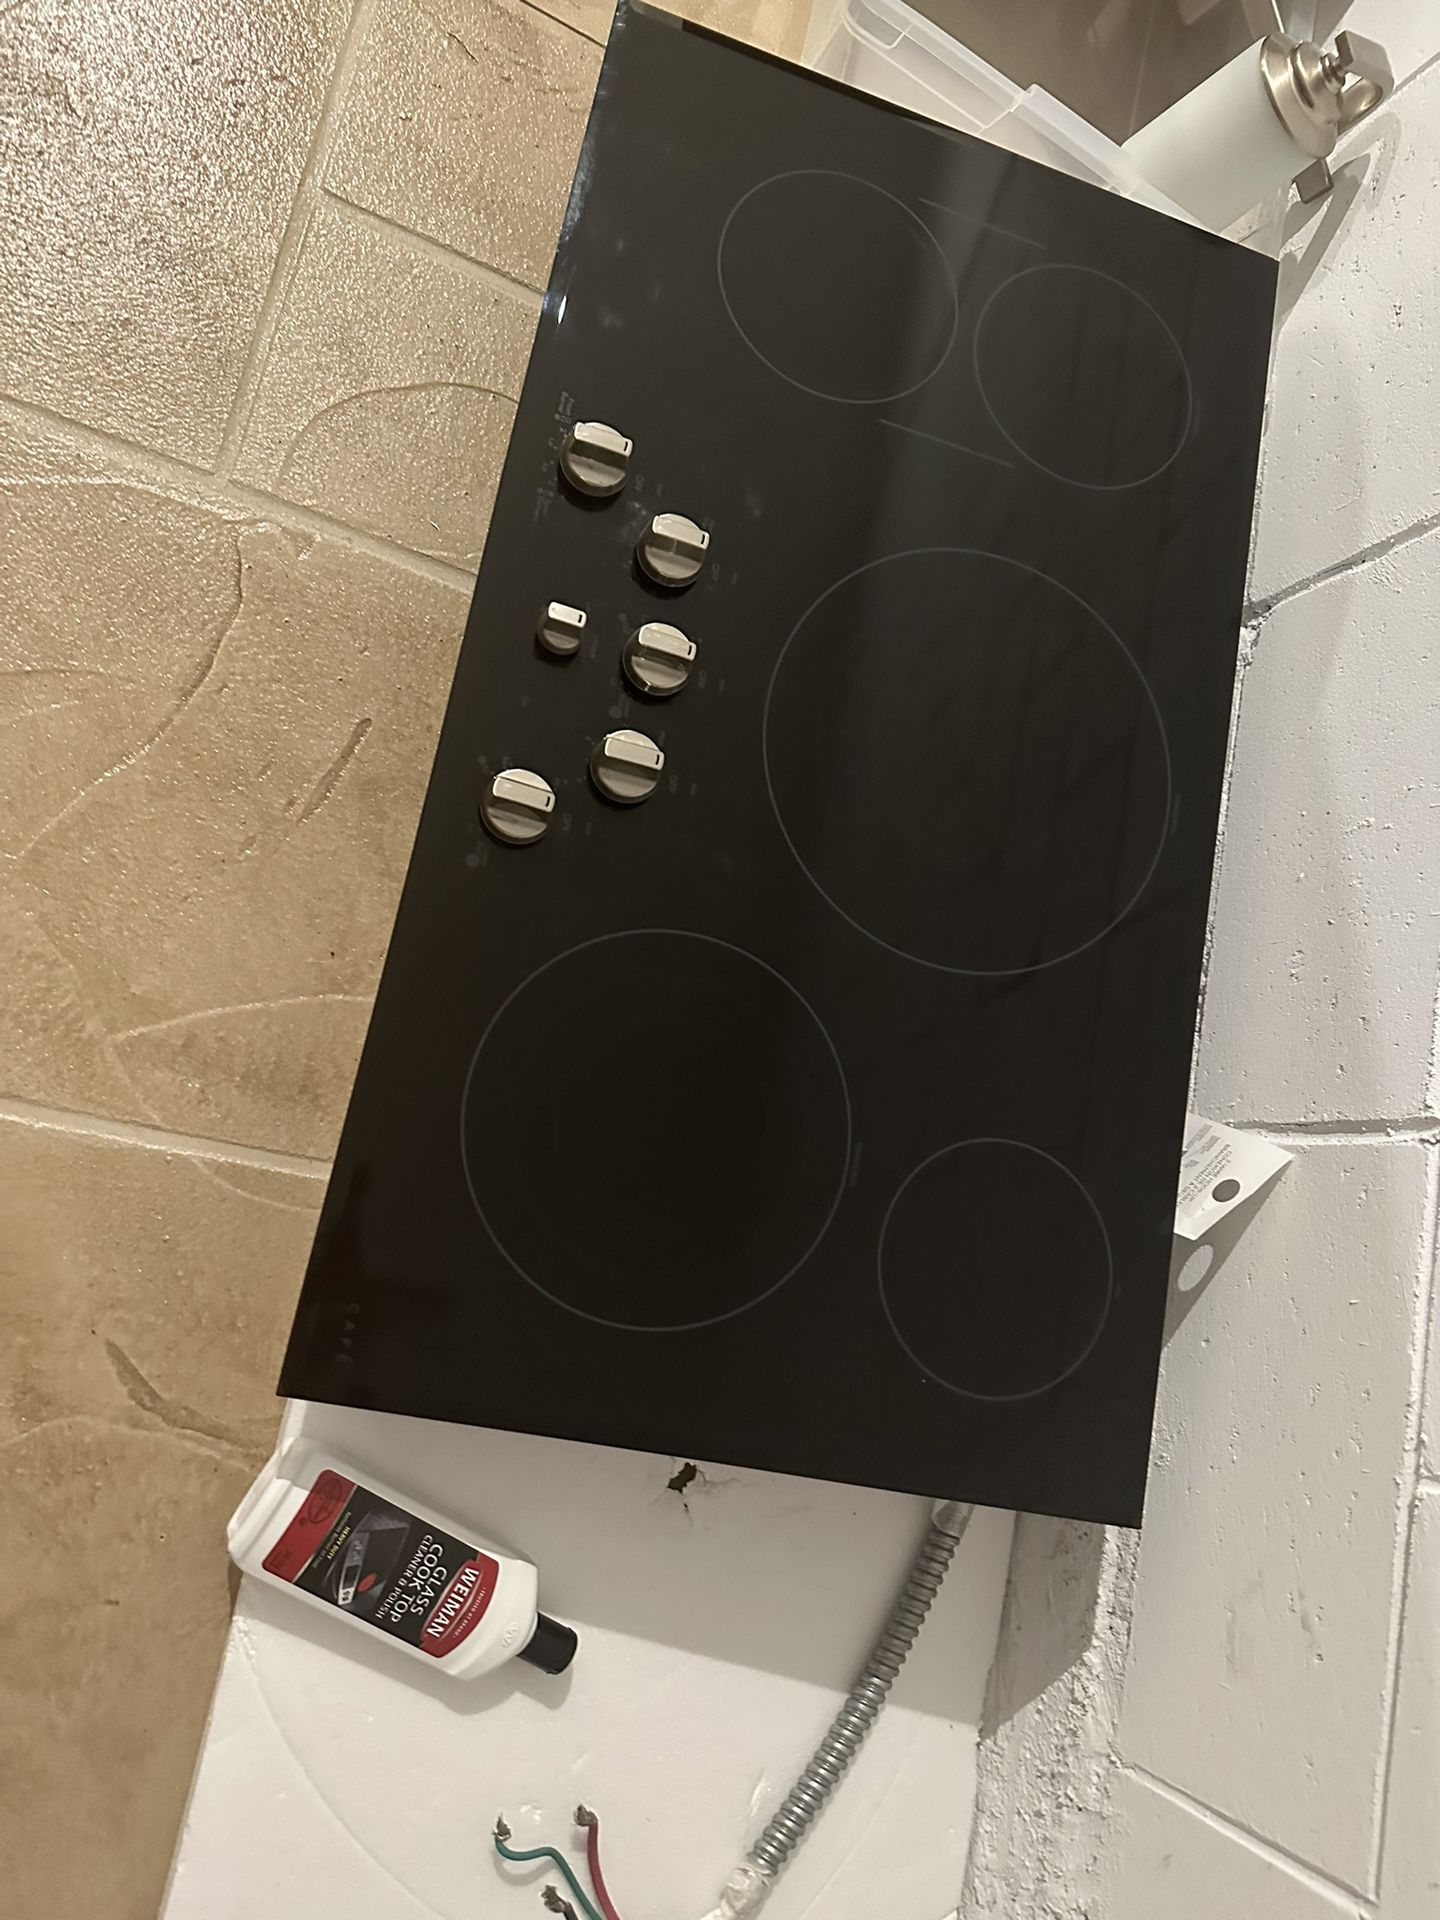 36 inch GE cooktop, Cafe model